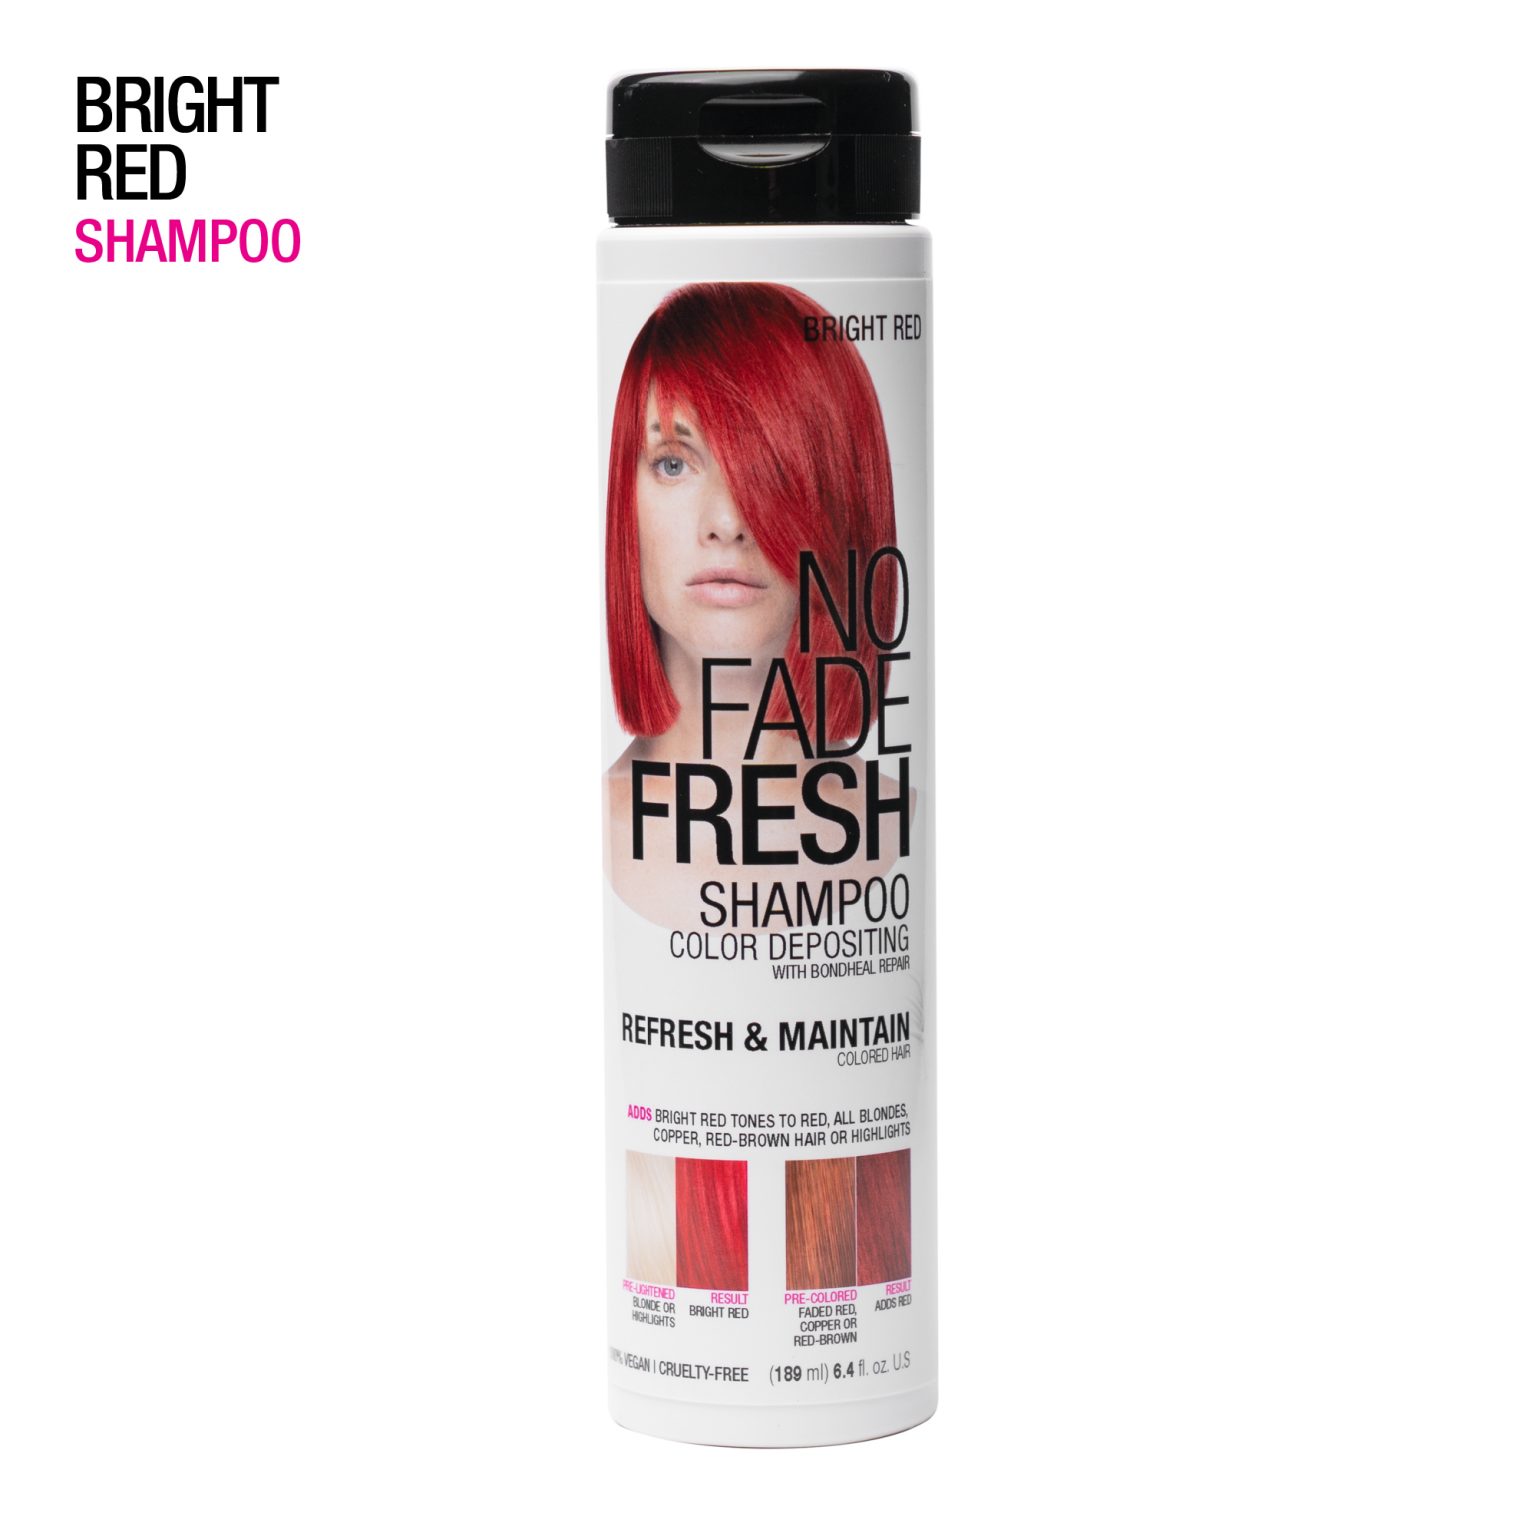 Bright Red Shampoo No Fade Fresh